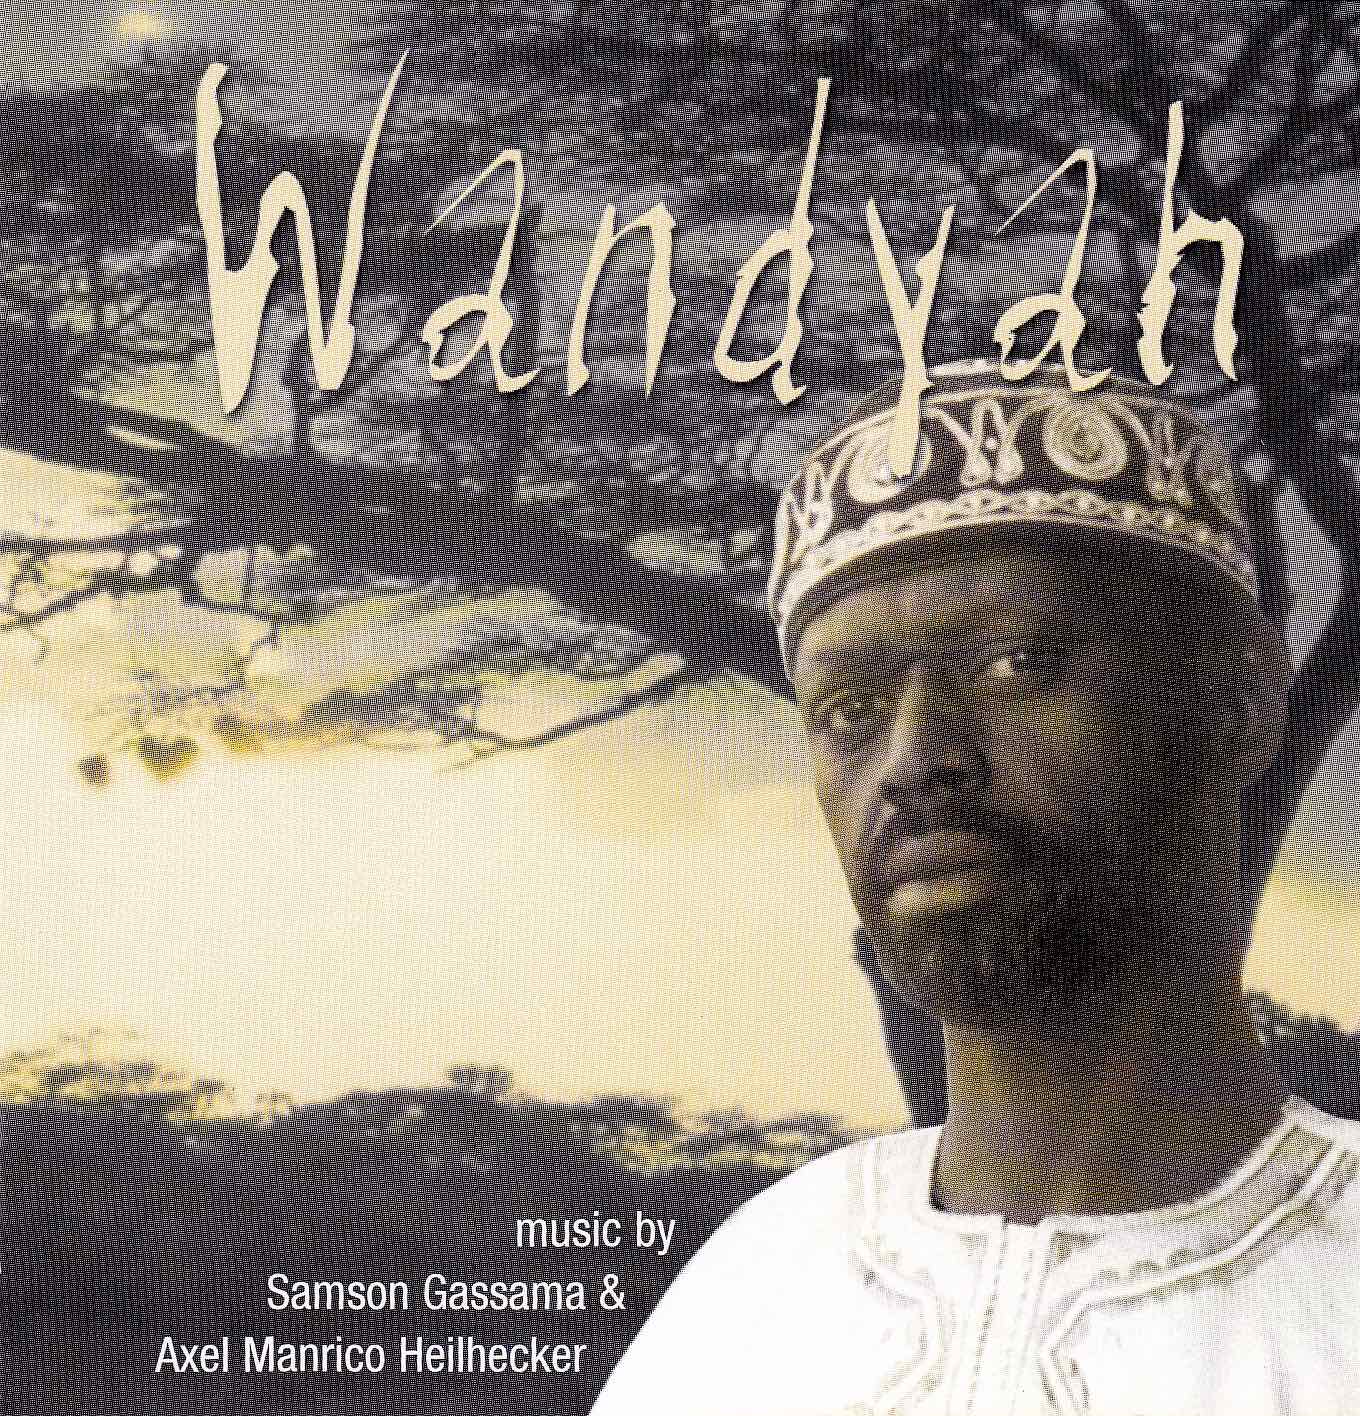 cover of album “Wandyah“